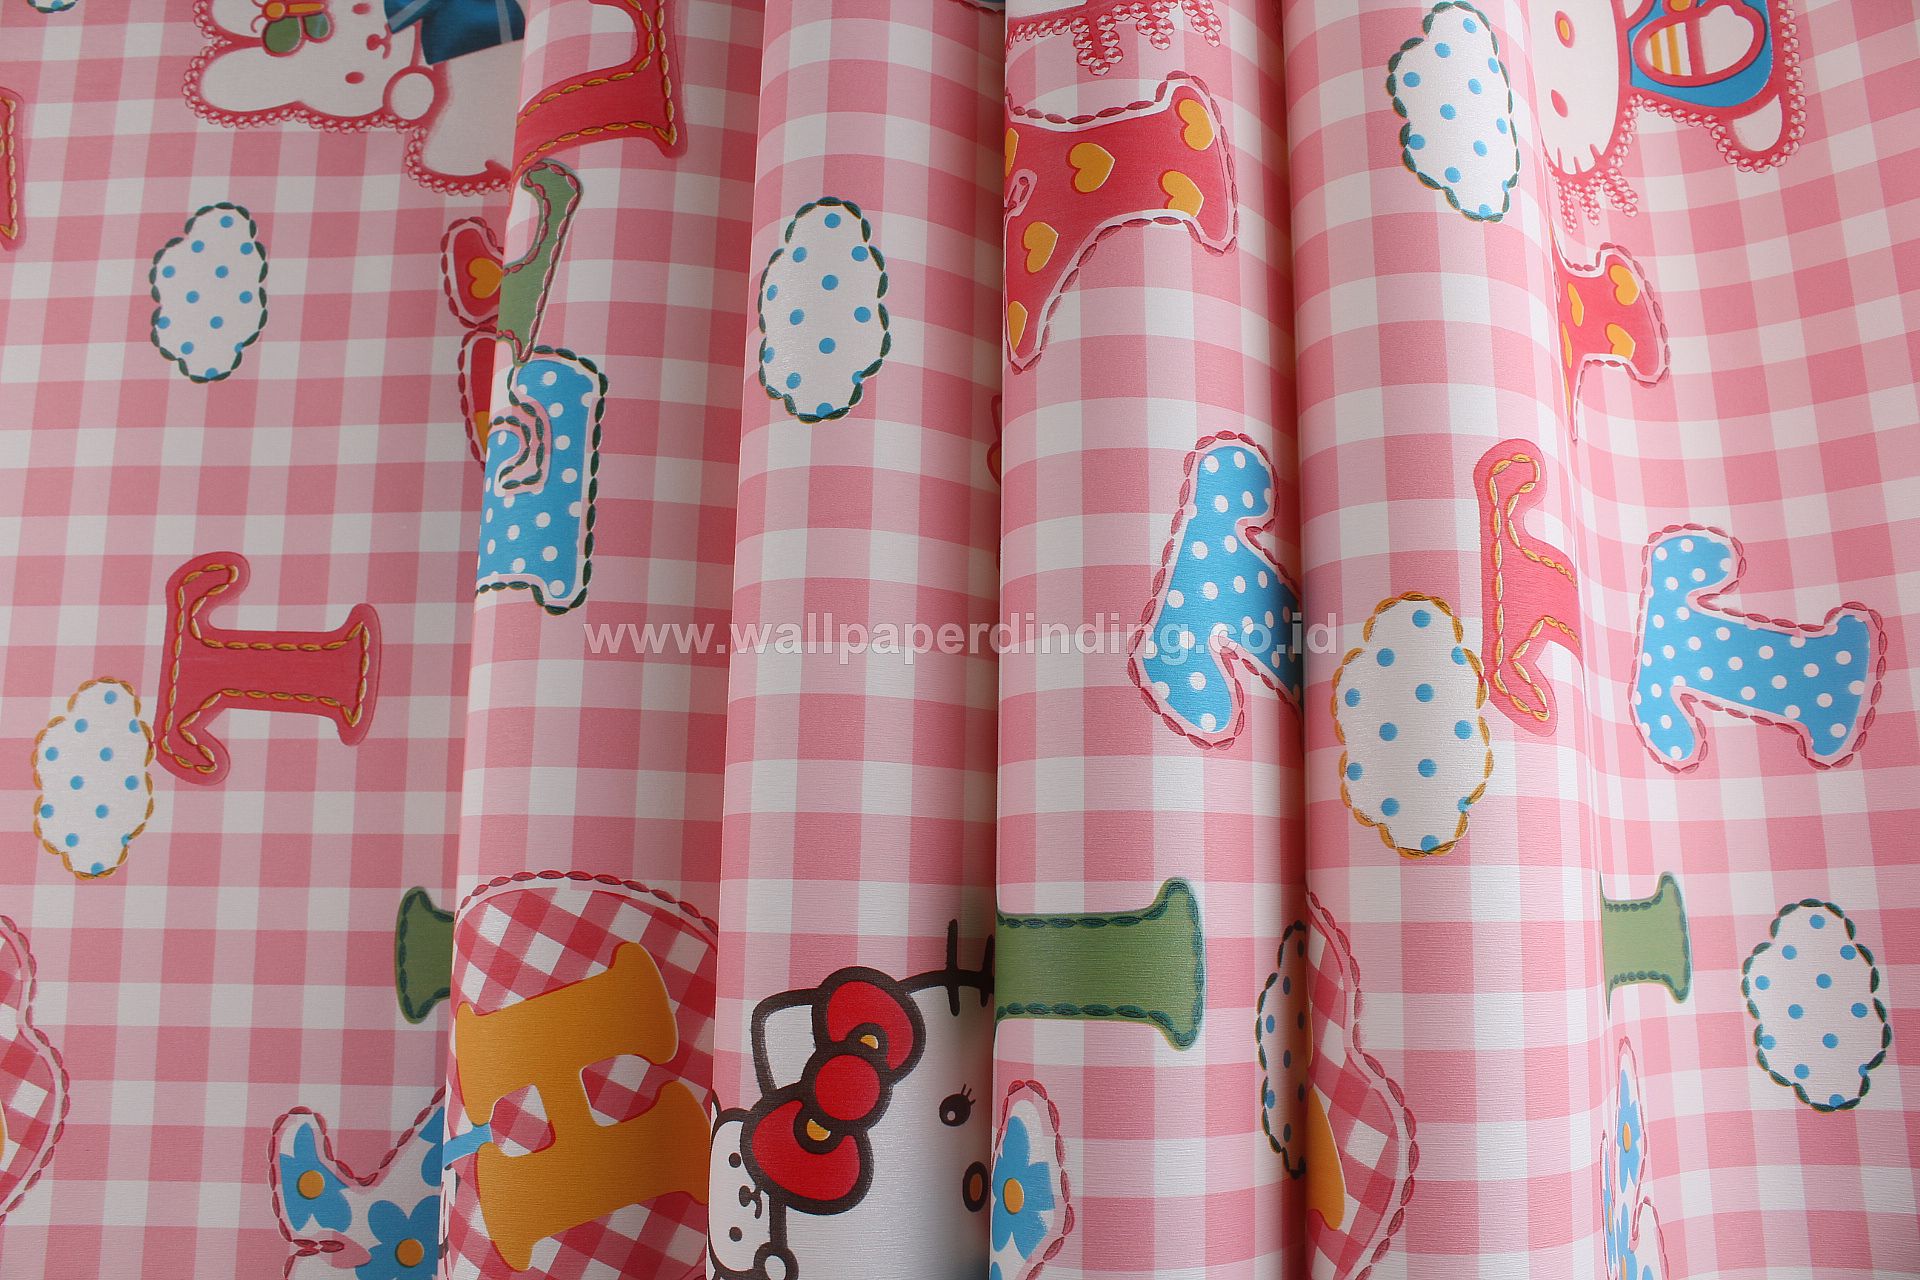 Wallpaper Dinding Anak Hello Kitty Pink Yr 4417 - Patchwork - HD Wallpaper 